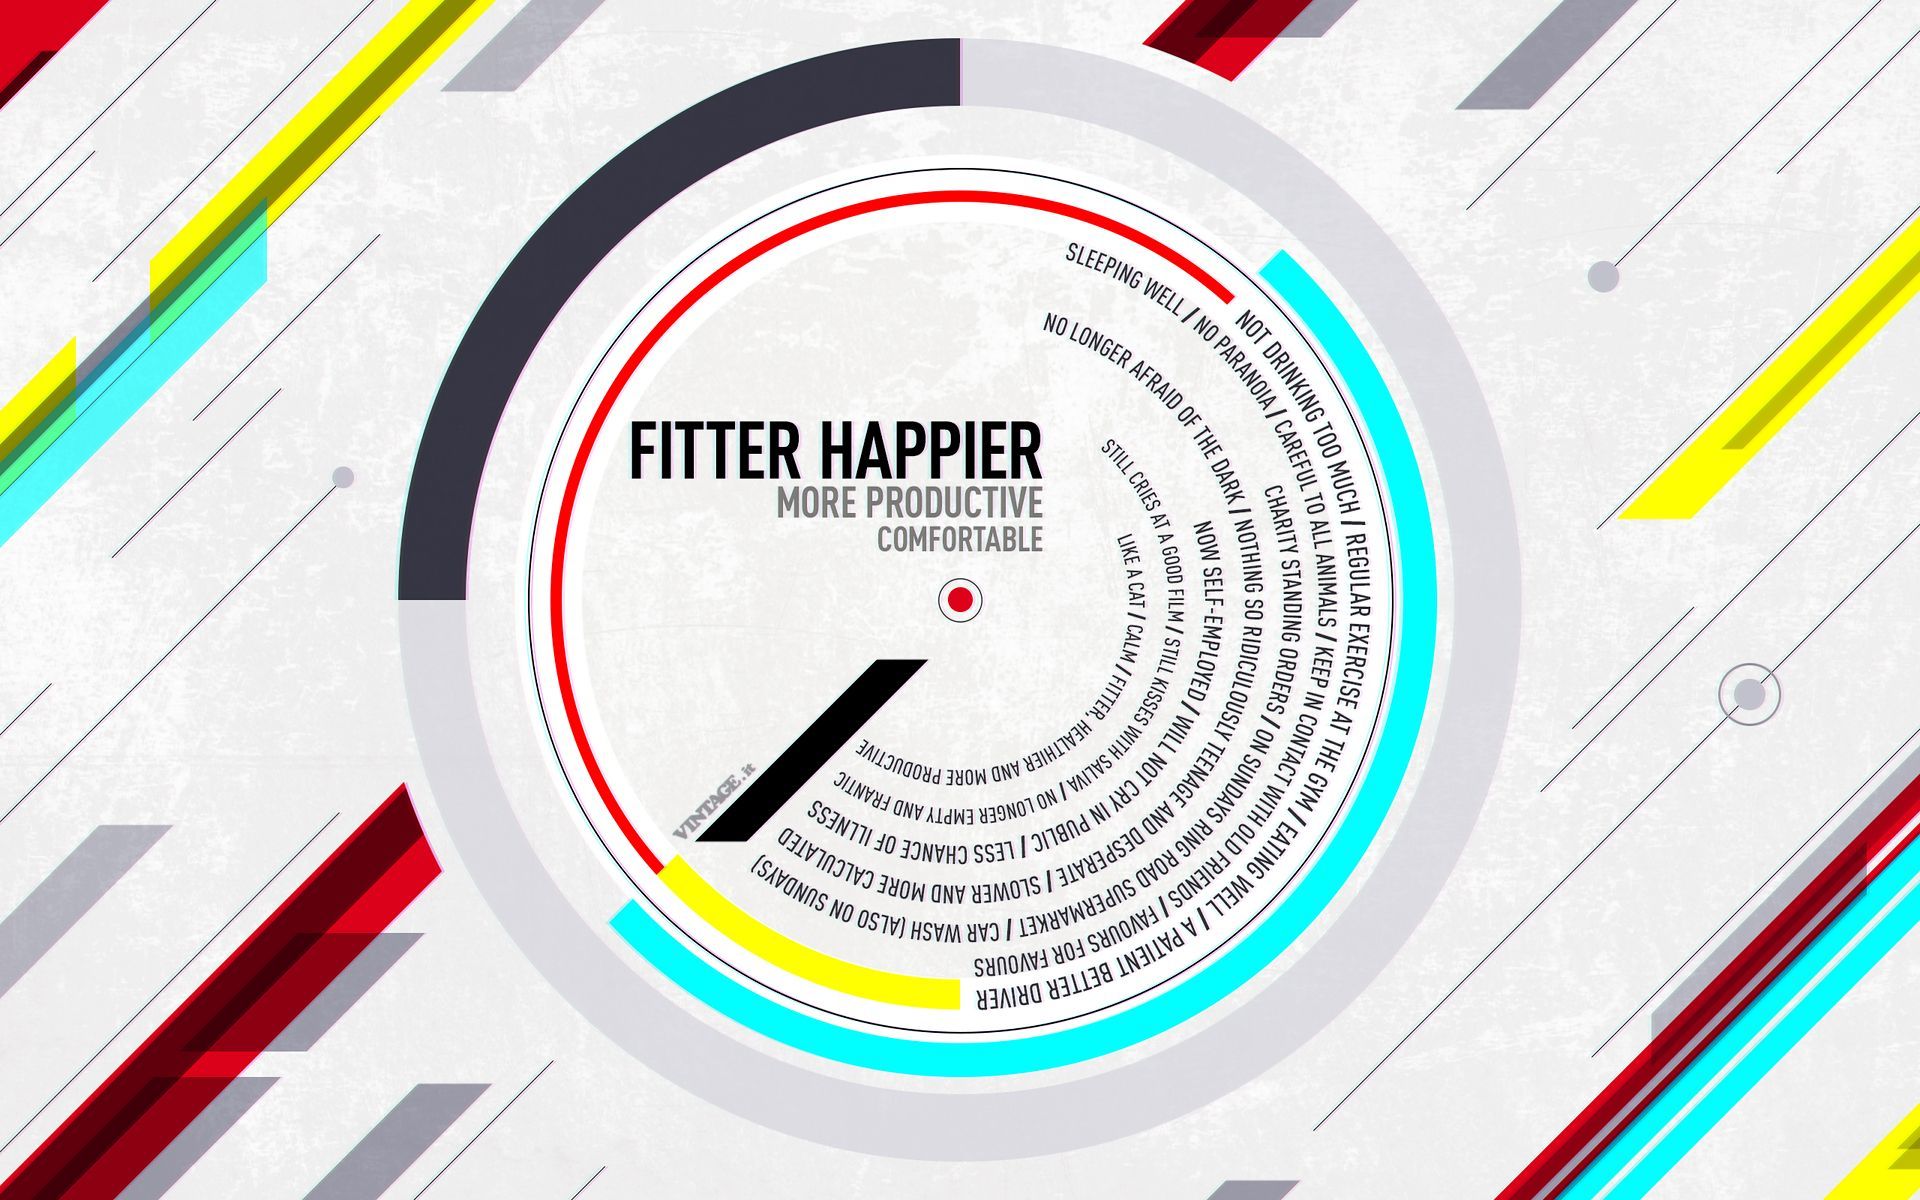 Fitter happier Radiohead wallpaper - Free Desktop HD iPad iPhone ...